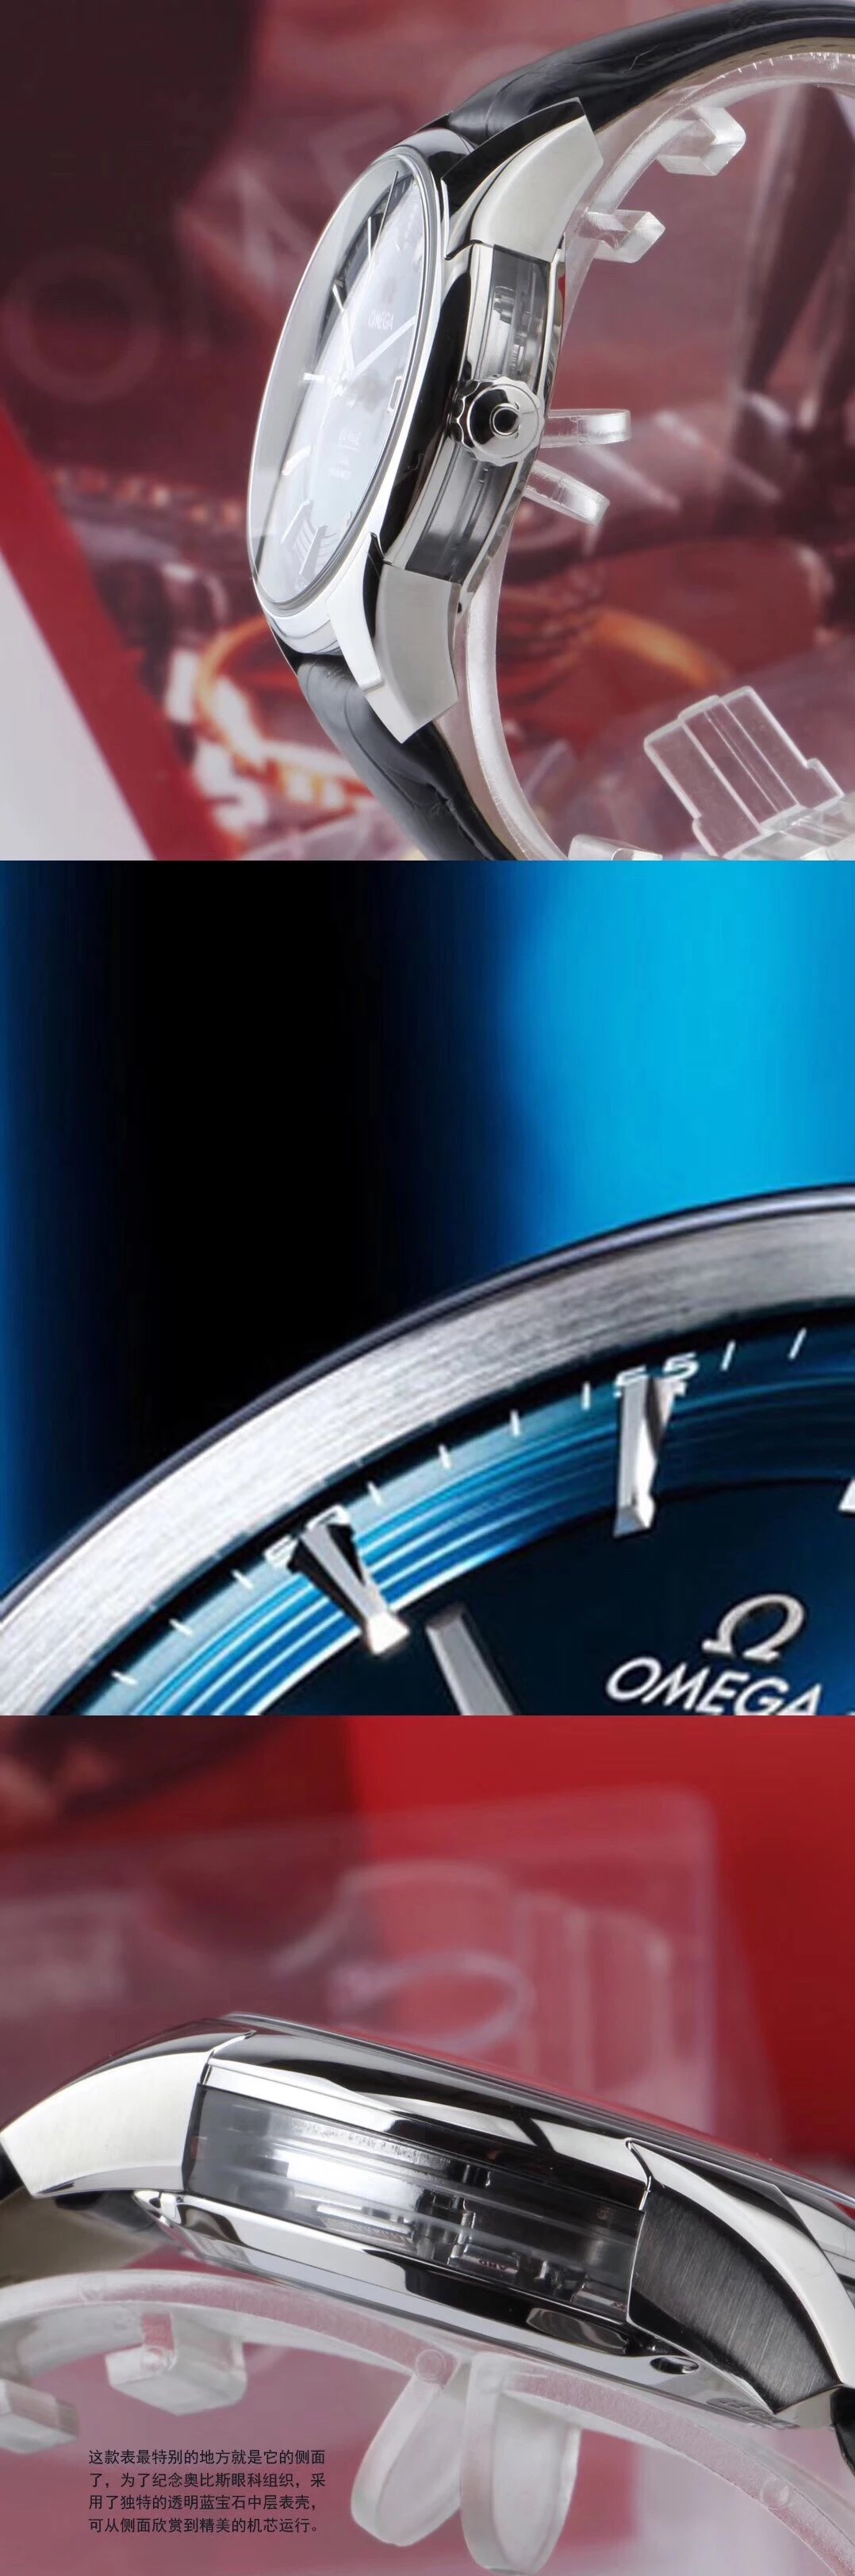 VS厂欧米伽碟飞明亮之蓝钢带男表采用VS1:18500机芯与原装一致通过时针调日历